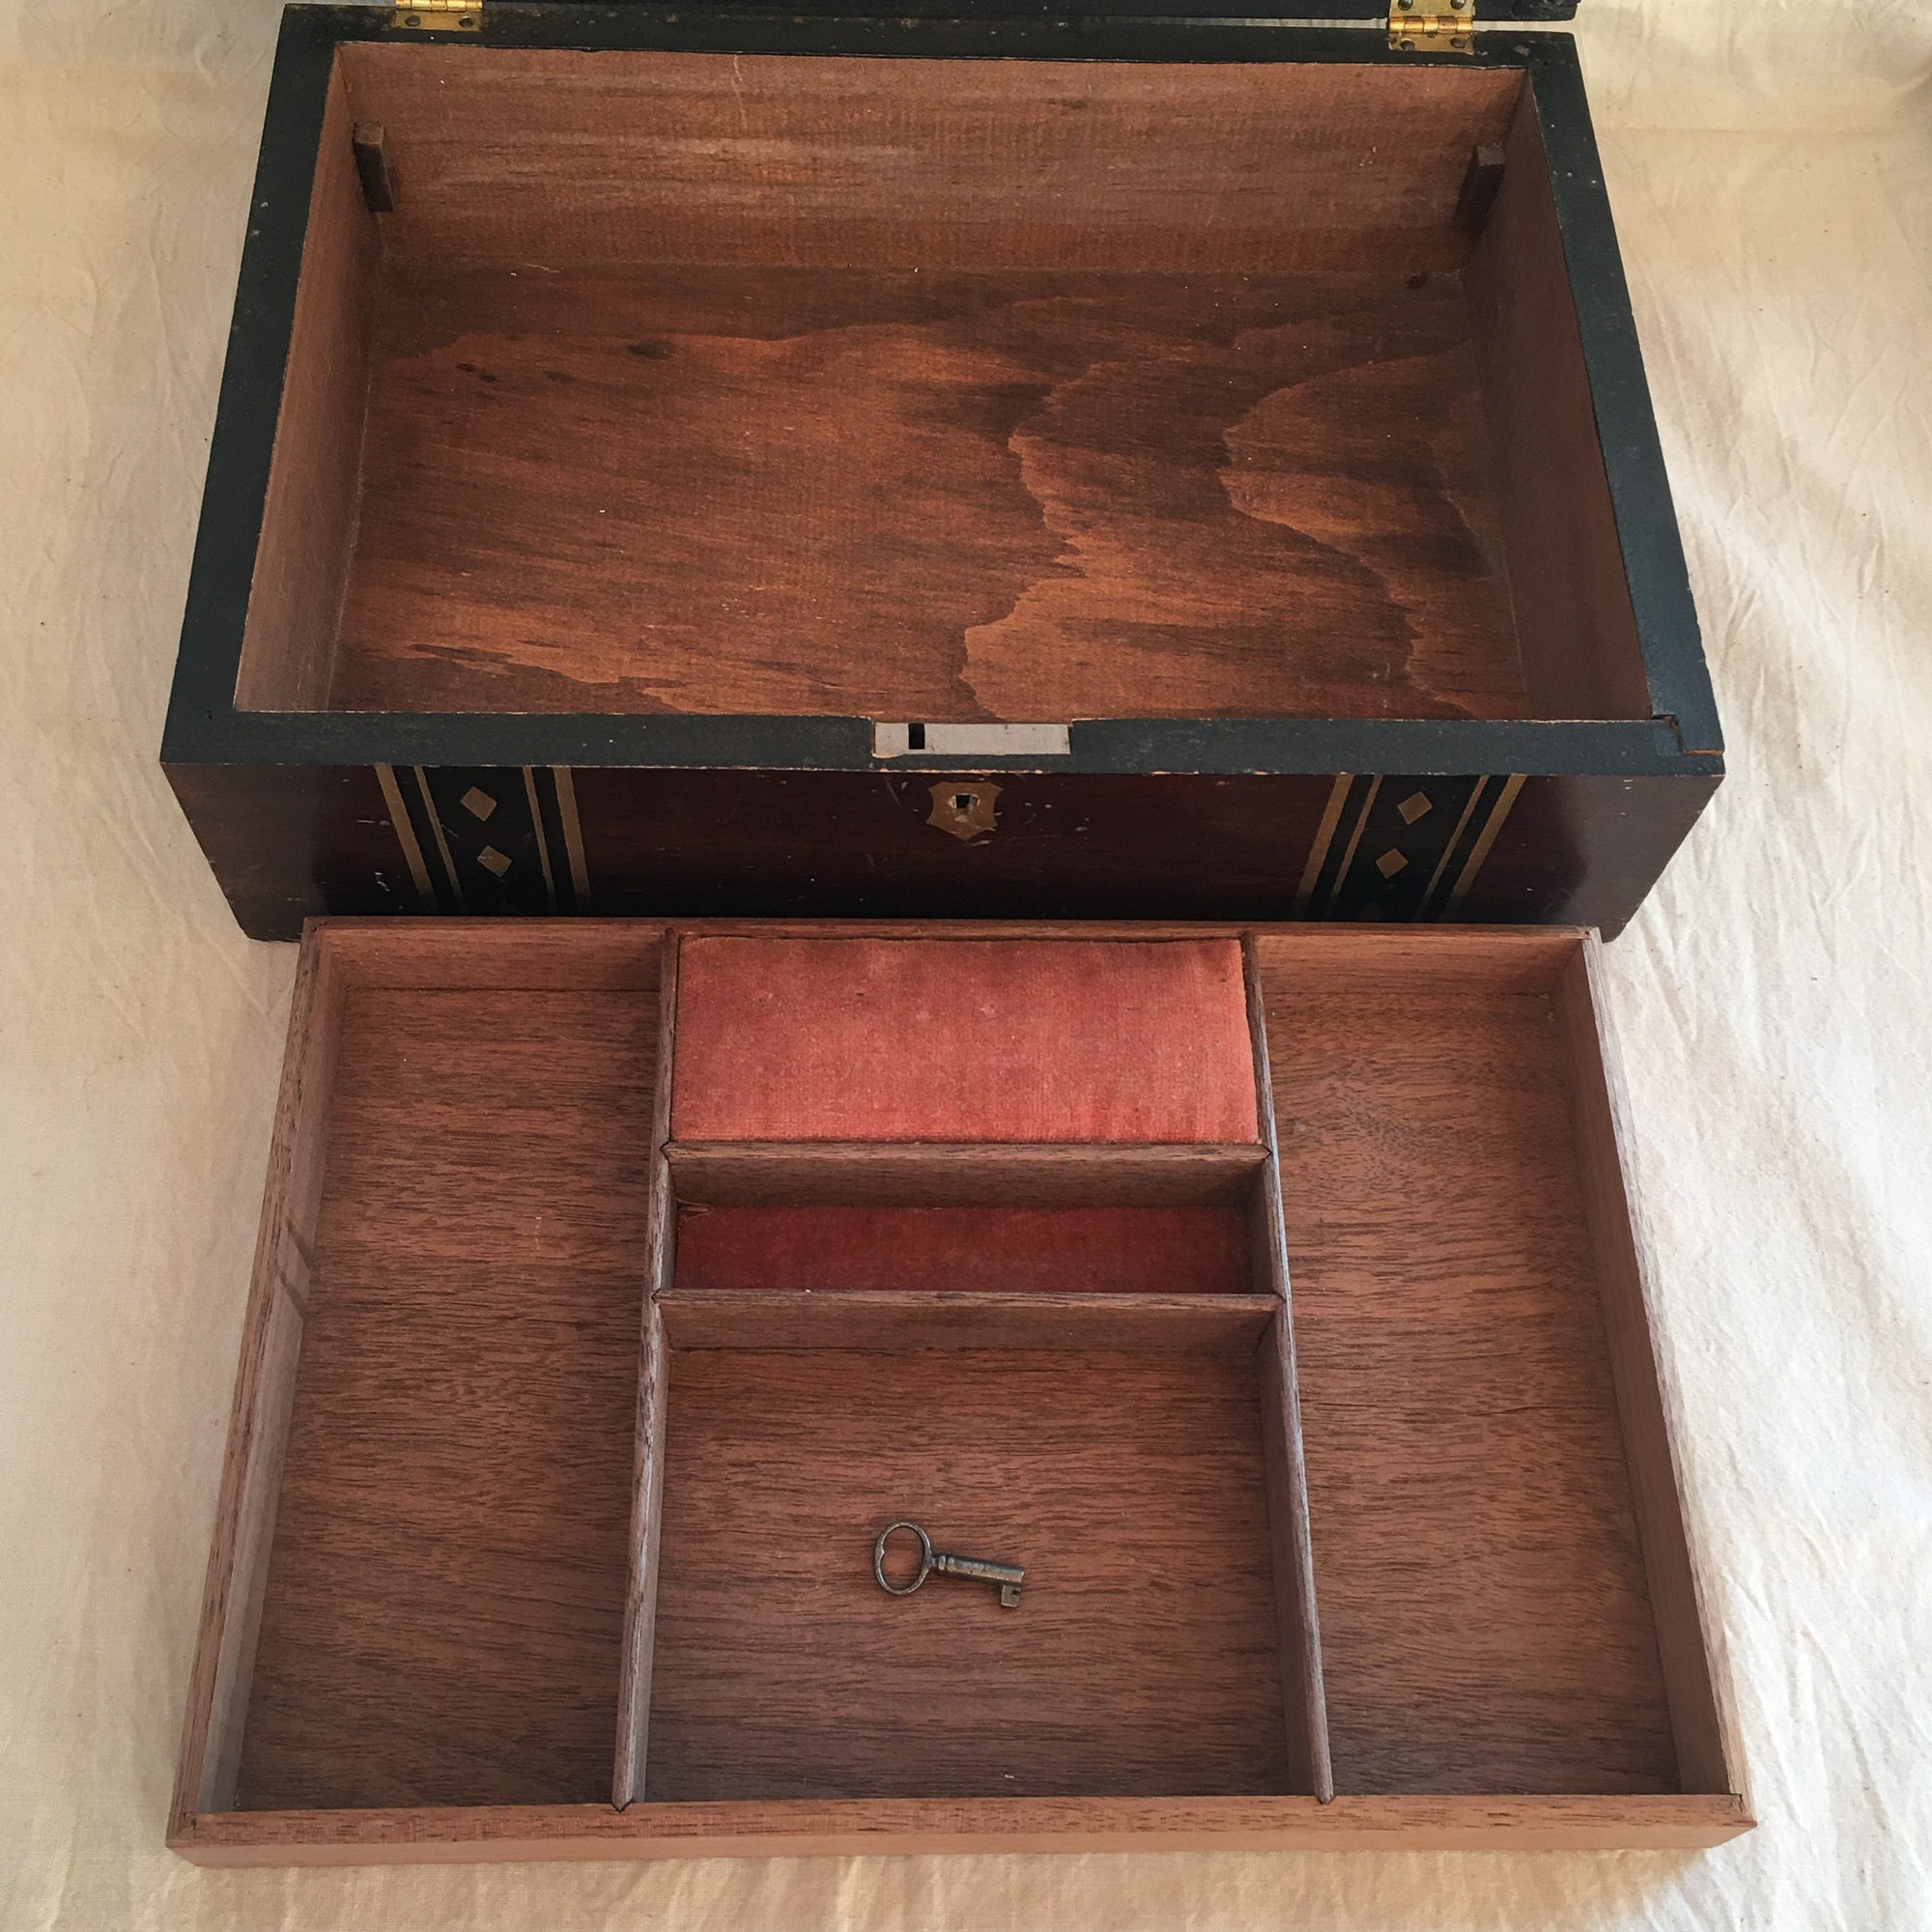 Art Deco Era Sewing Box with Working Lock